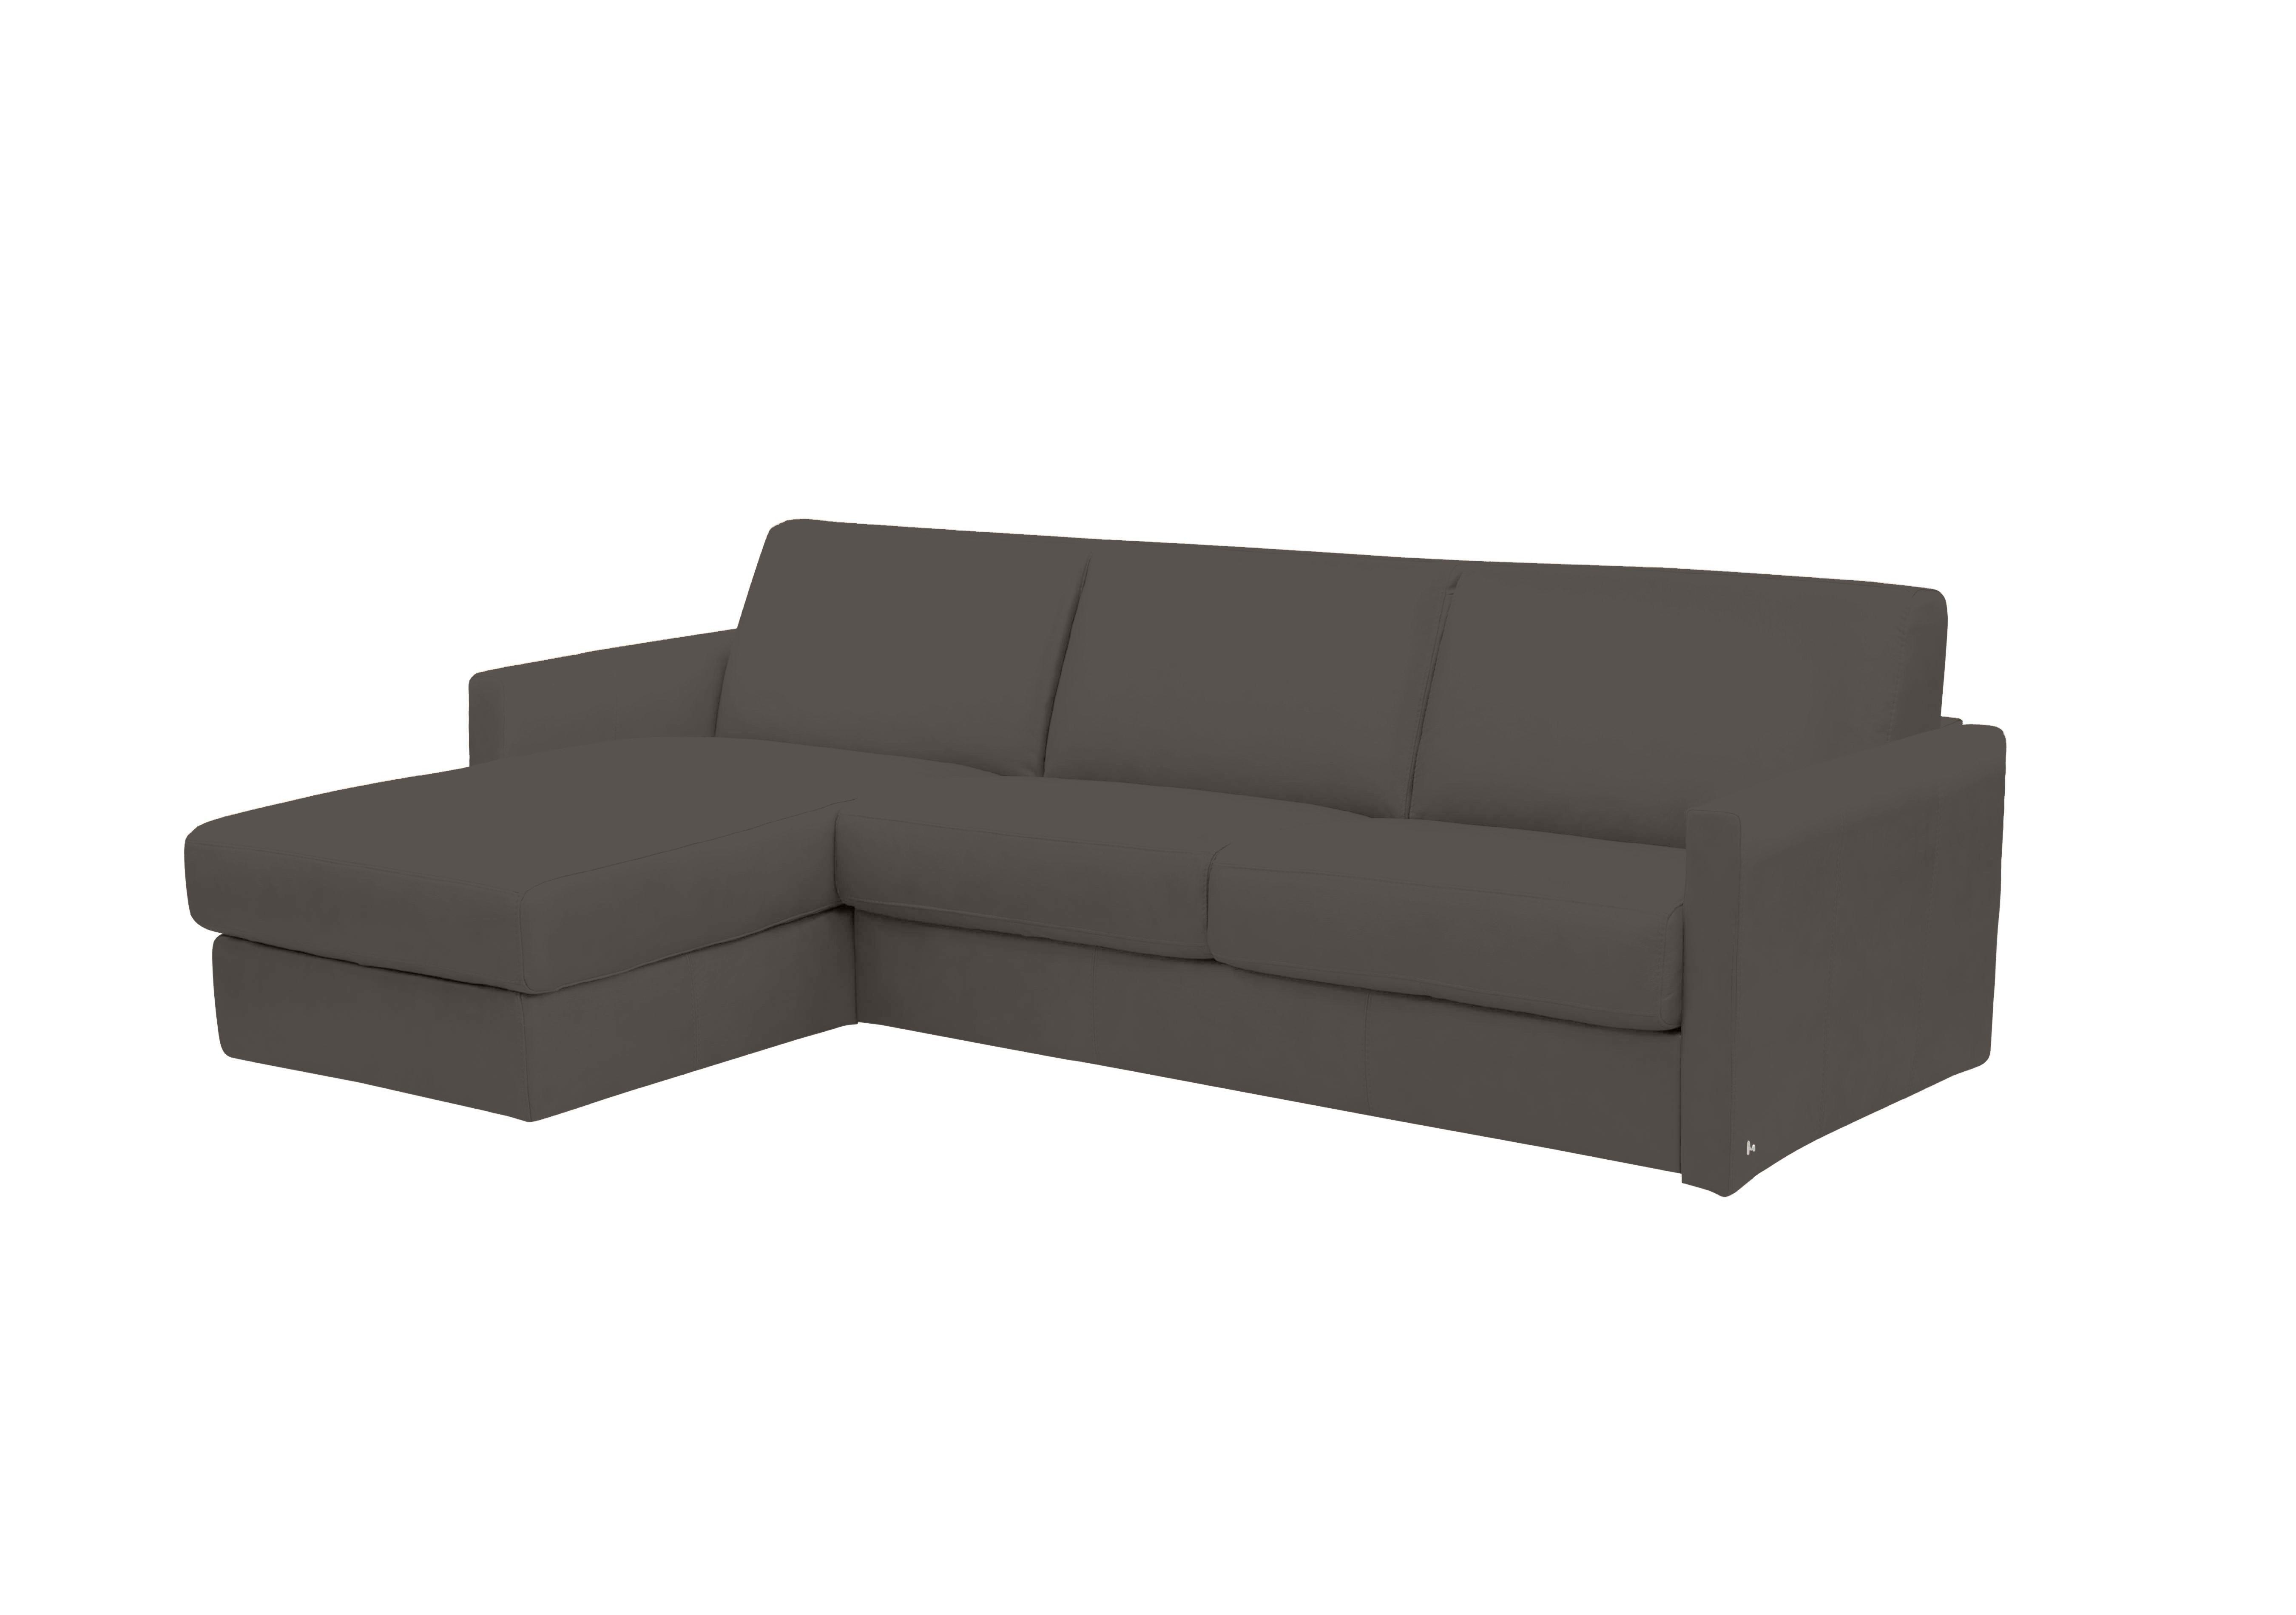 Alcova 3 Seater Leather Sofa Bed with Storage Chaise and Slim Arms in Torello Grigio Scuro 327 on Furniture Village